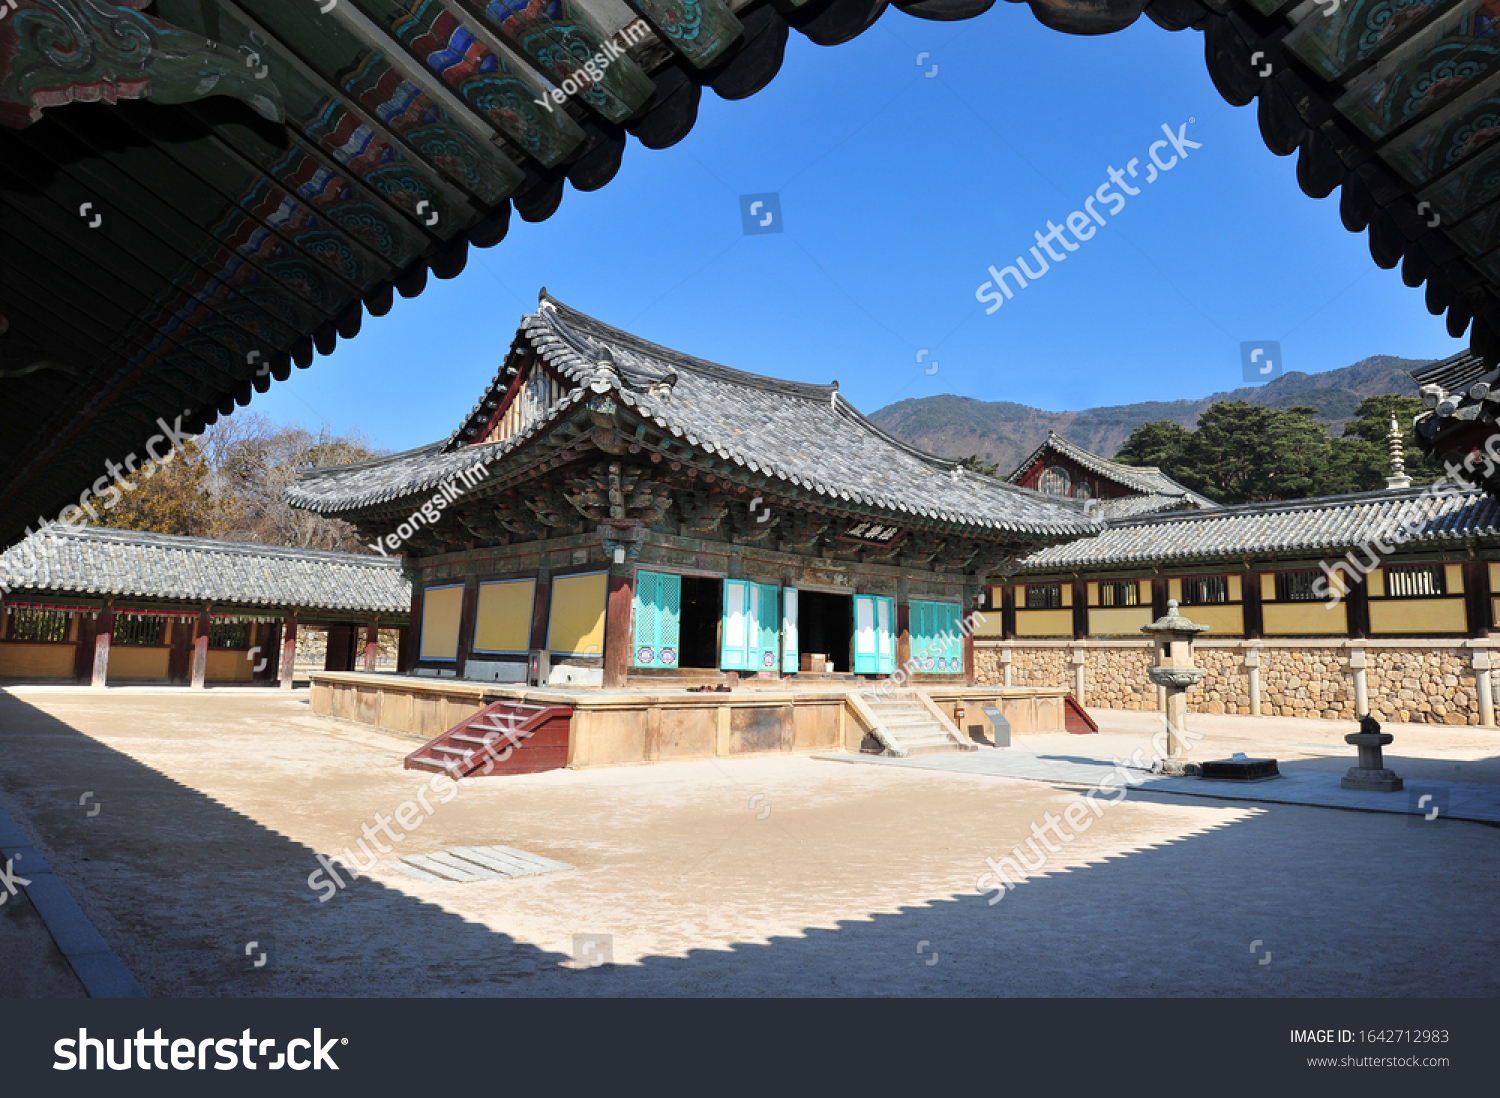 geuknakjeon-bulguksa-temple-chinese-letters-picture-stock-photo